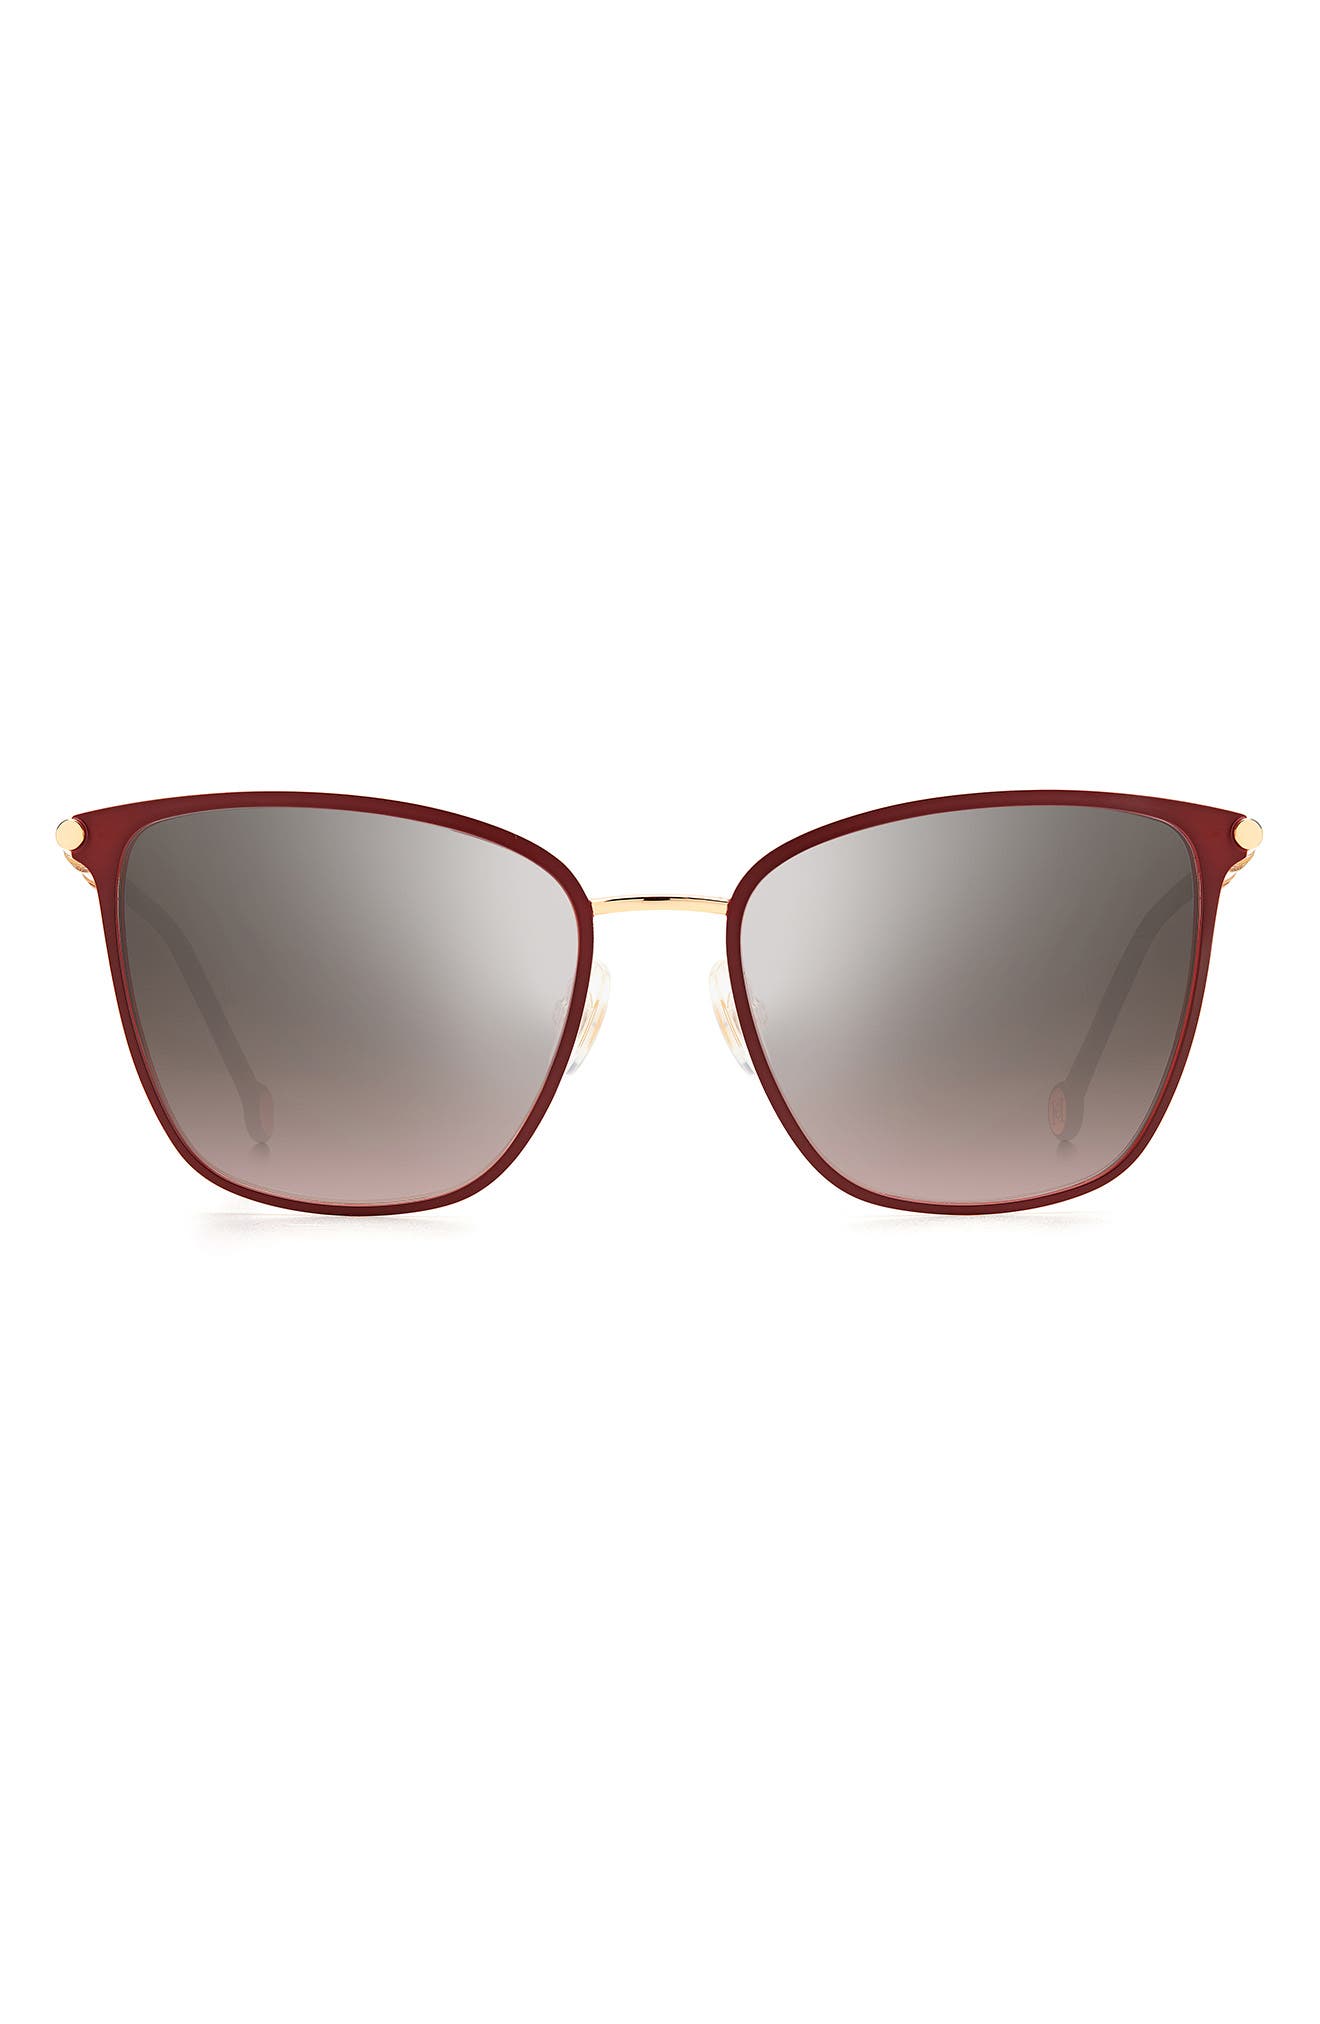 Carolina Herrera 58mm Gradient Sunglasses in Gold Brgn /Brown at Nordstrom